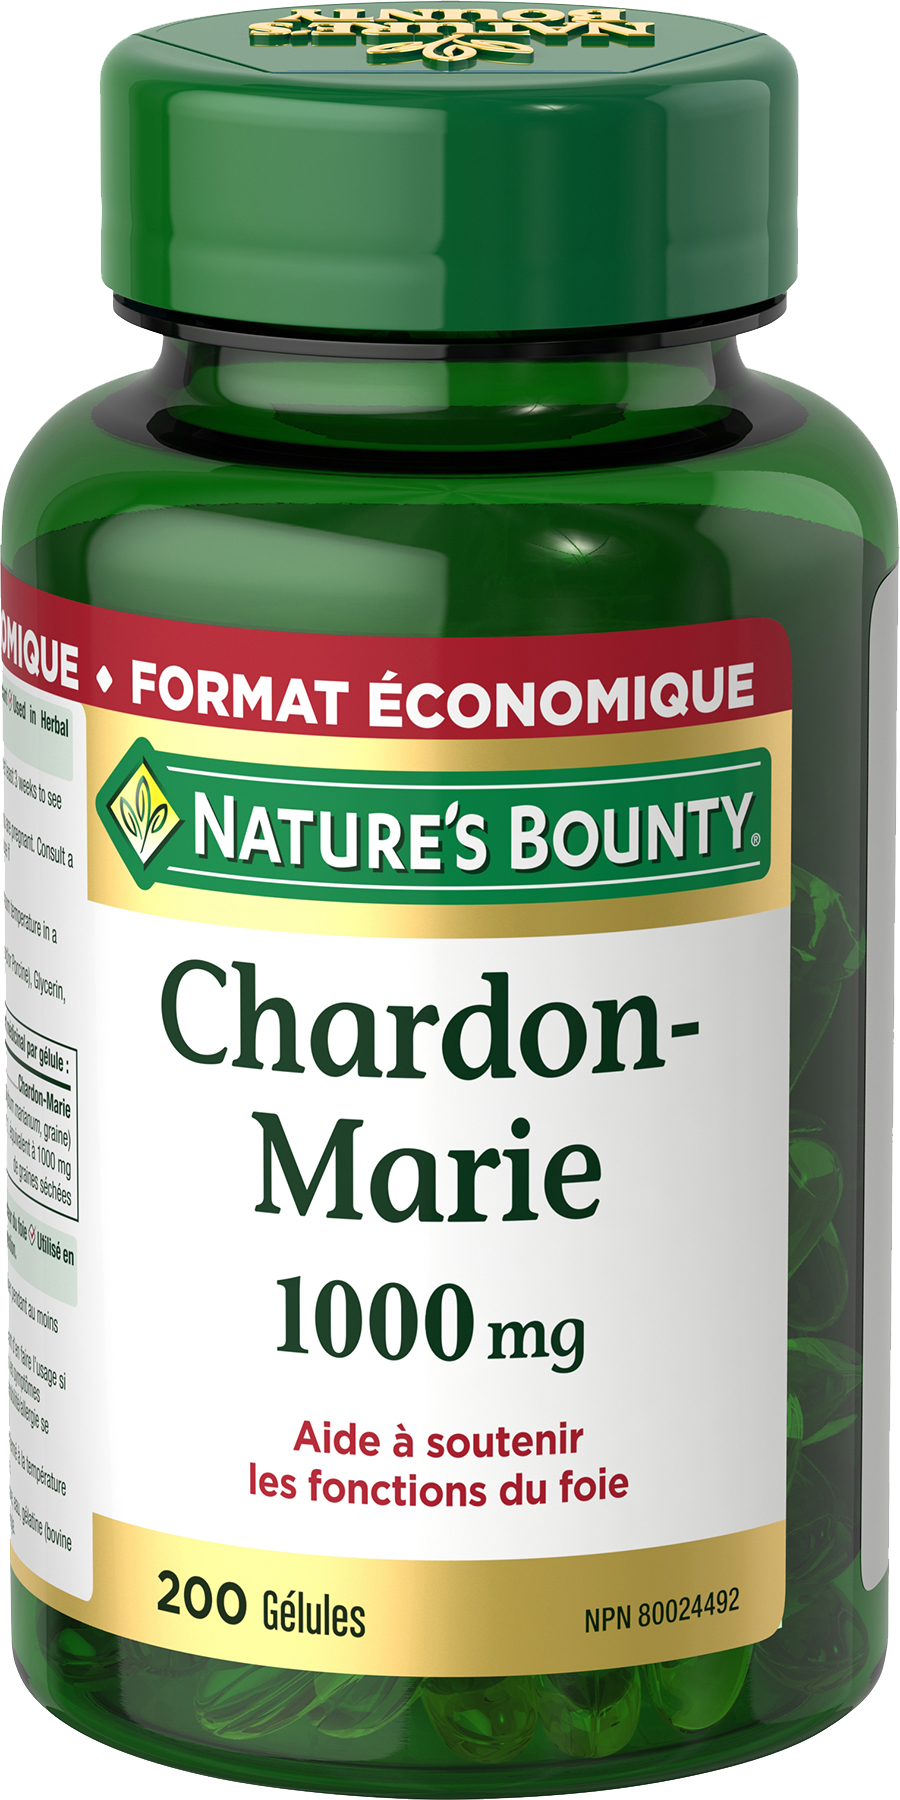 Chardon-Marie 